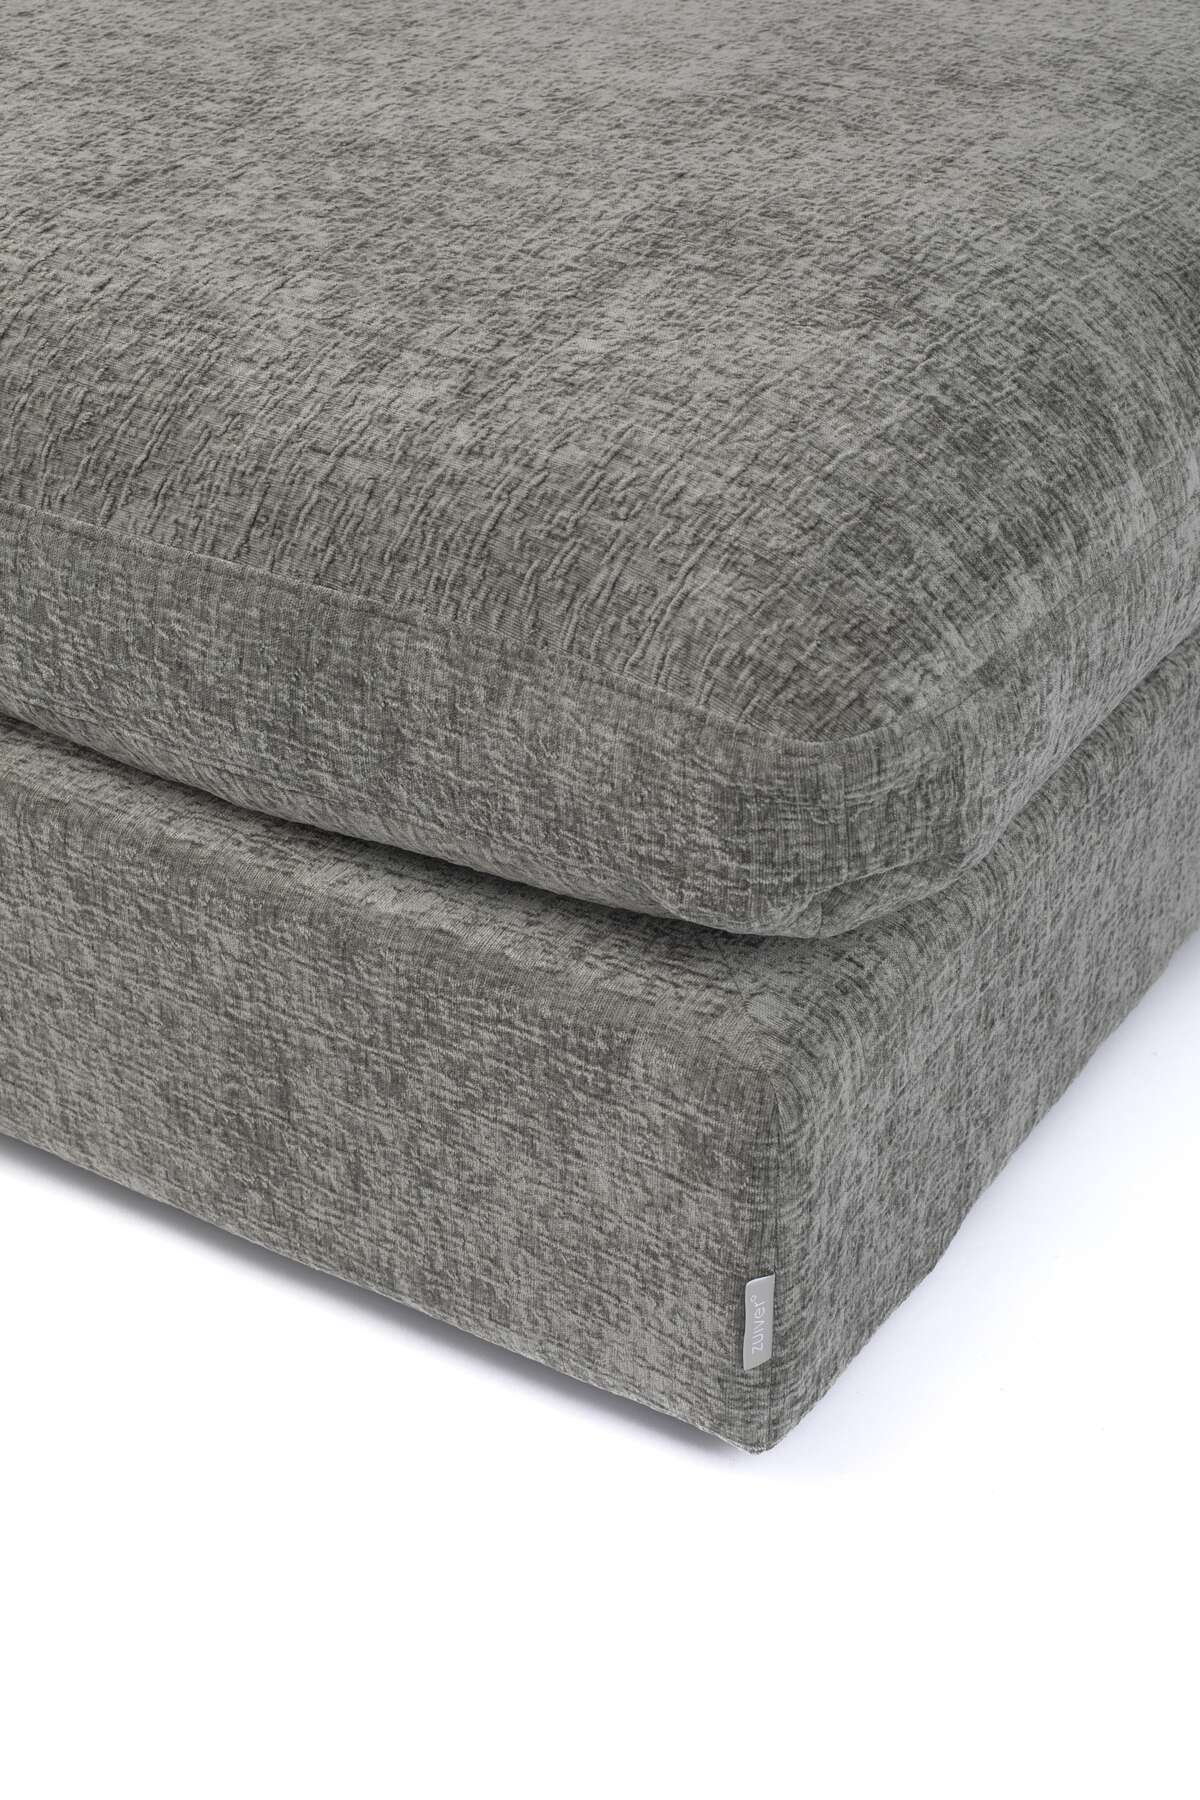 SENSE footstool dark grey, Zuiver, Eye on Design